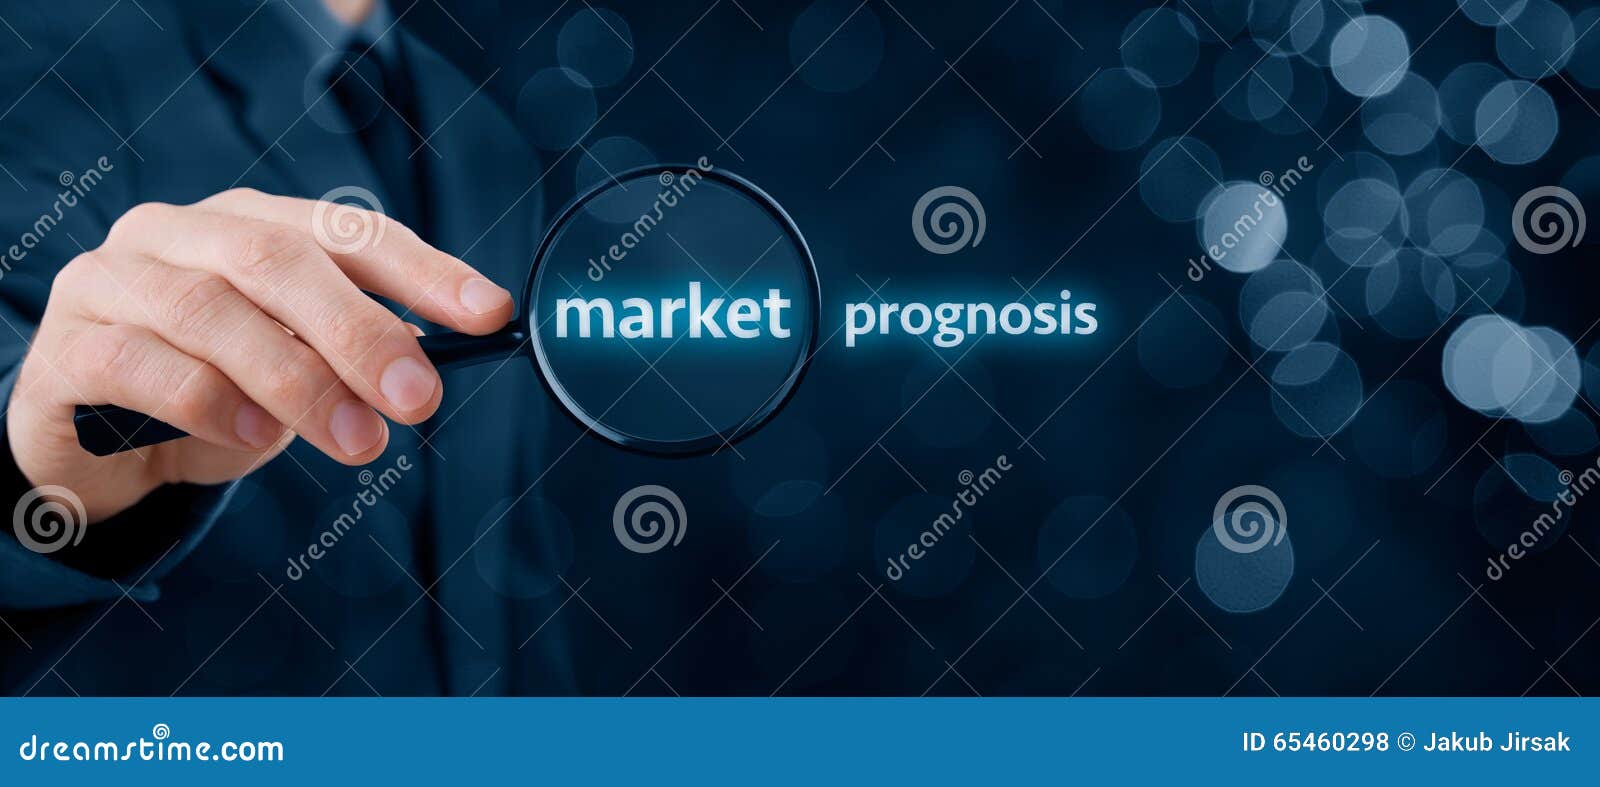 market prognosis